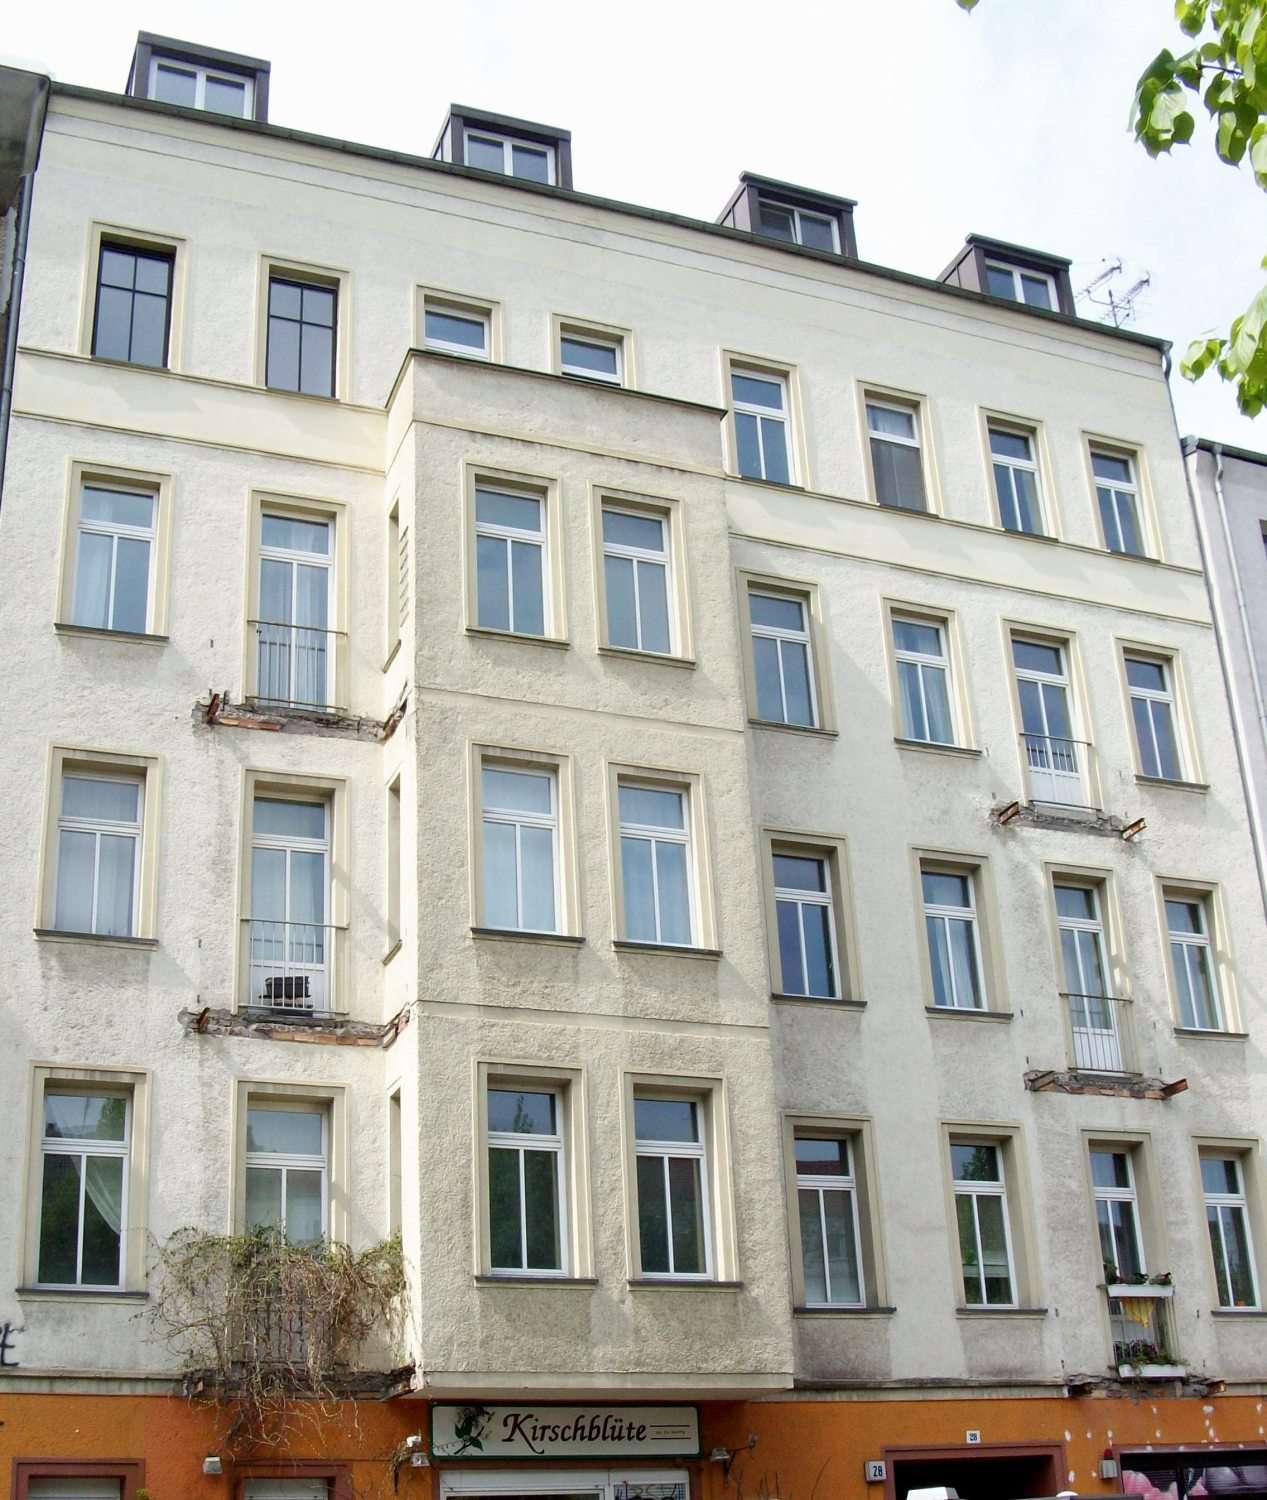 Petersburger Str. 28, 10249 Berlin - Friedrichshain (Friedrichshain) |  ImmobilienScout24